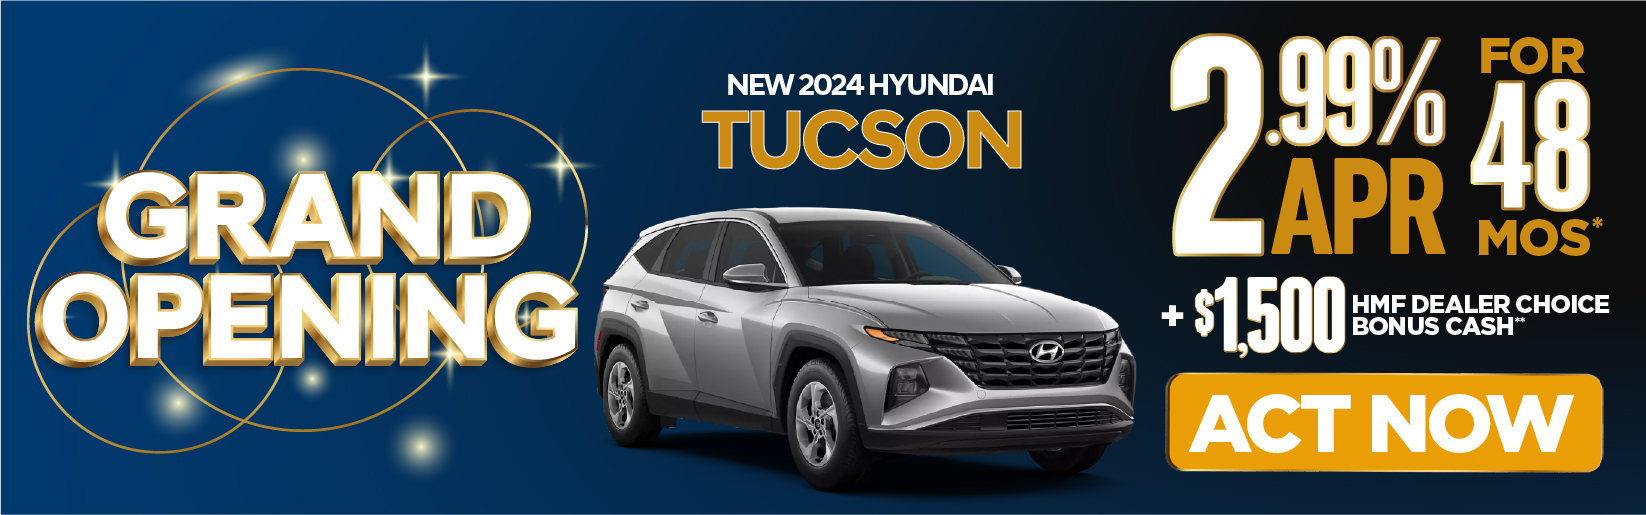 New 2024 Hyundai Tucson - 2.99% APR for 48 mos* + $1500 HMF Dealer Choice Bonus Cash** - Act Now